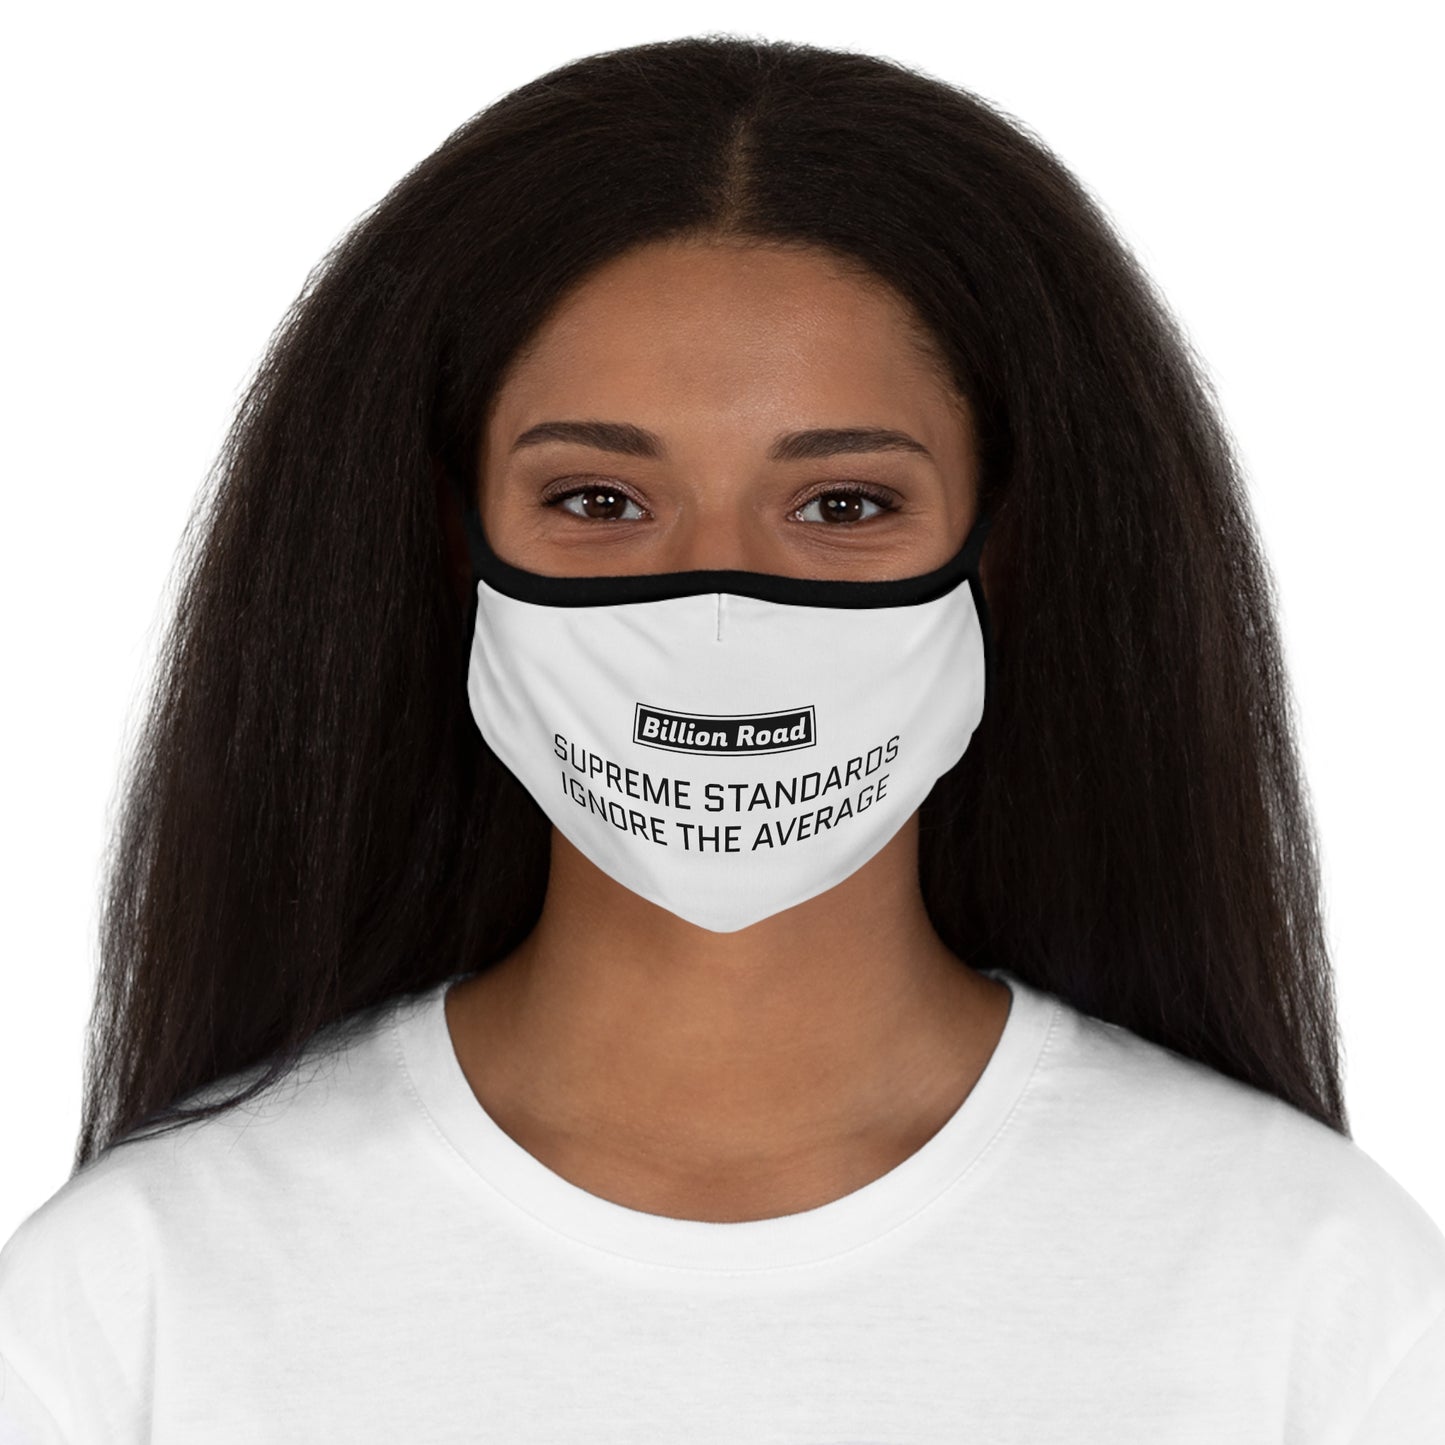 Billion Road Face Mask